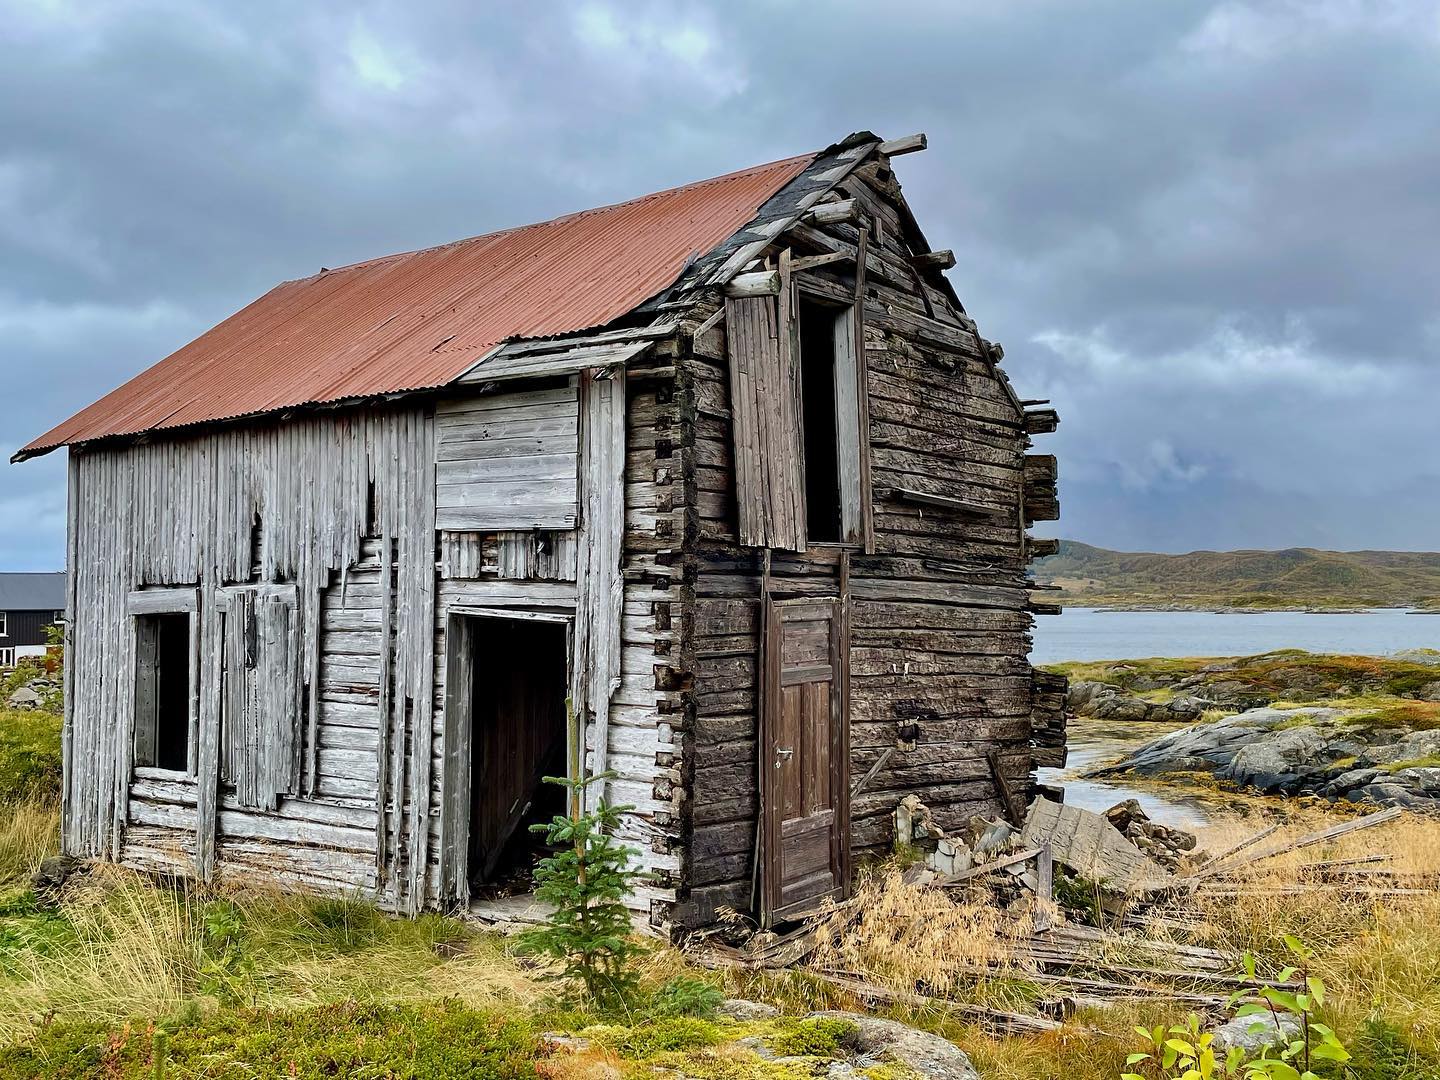 Fotogene Hütte [Borgvåg] 
.
.
.
#lofoten #borgvåg #lostplaces #norway